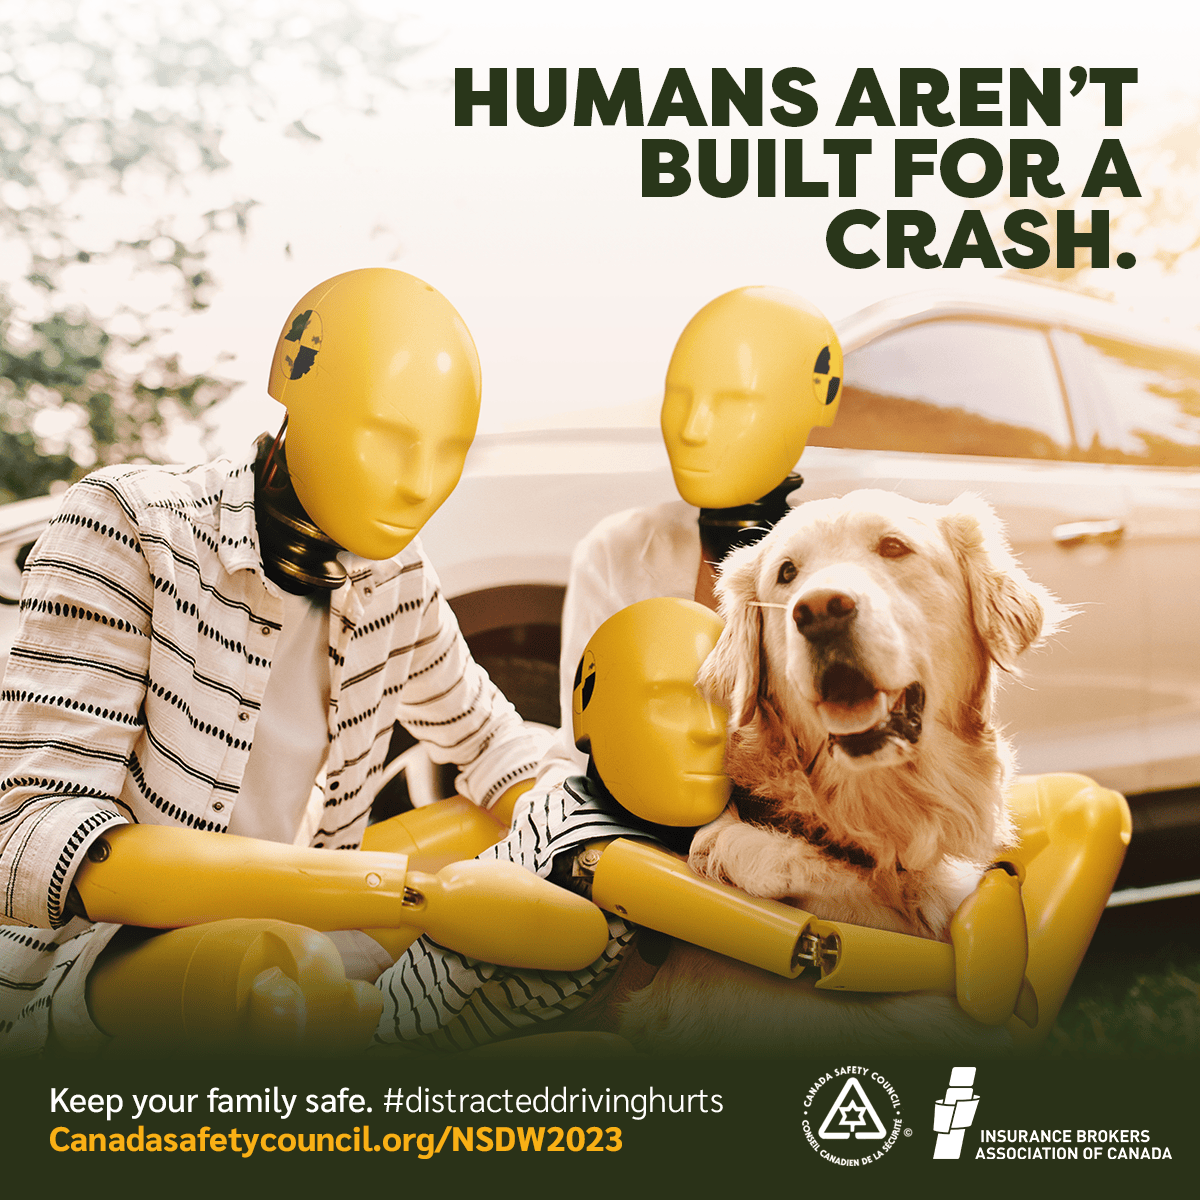 Human aren't built for a crash